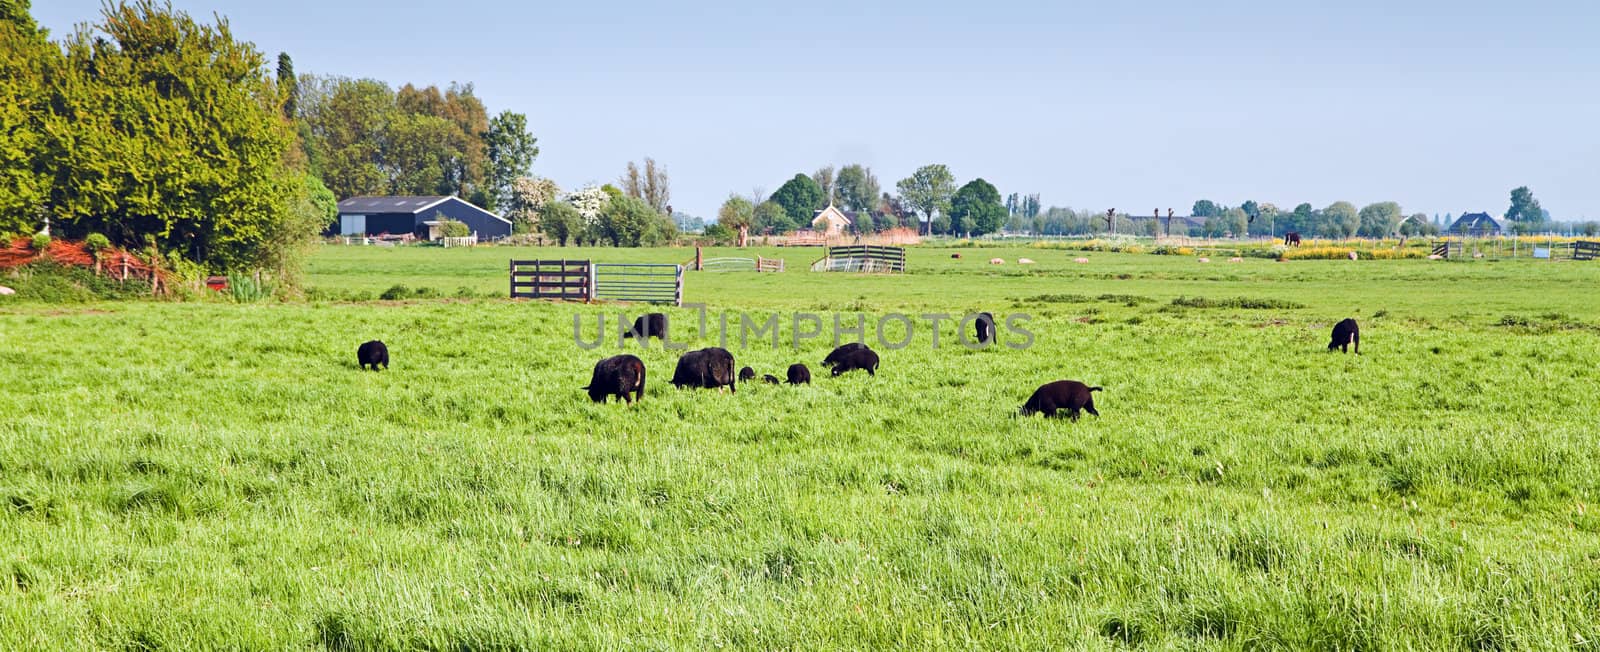 Dutch polder landscape in spring with grazing black sheep